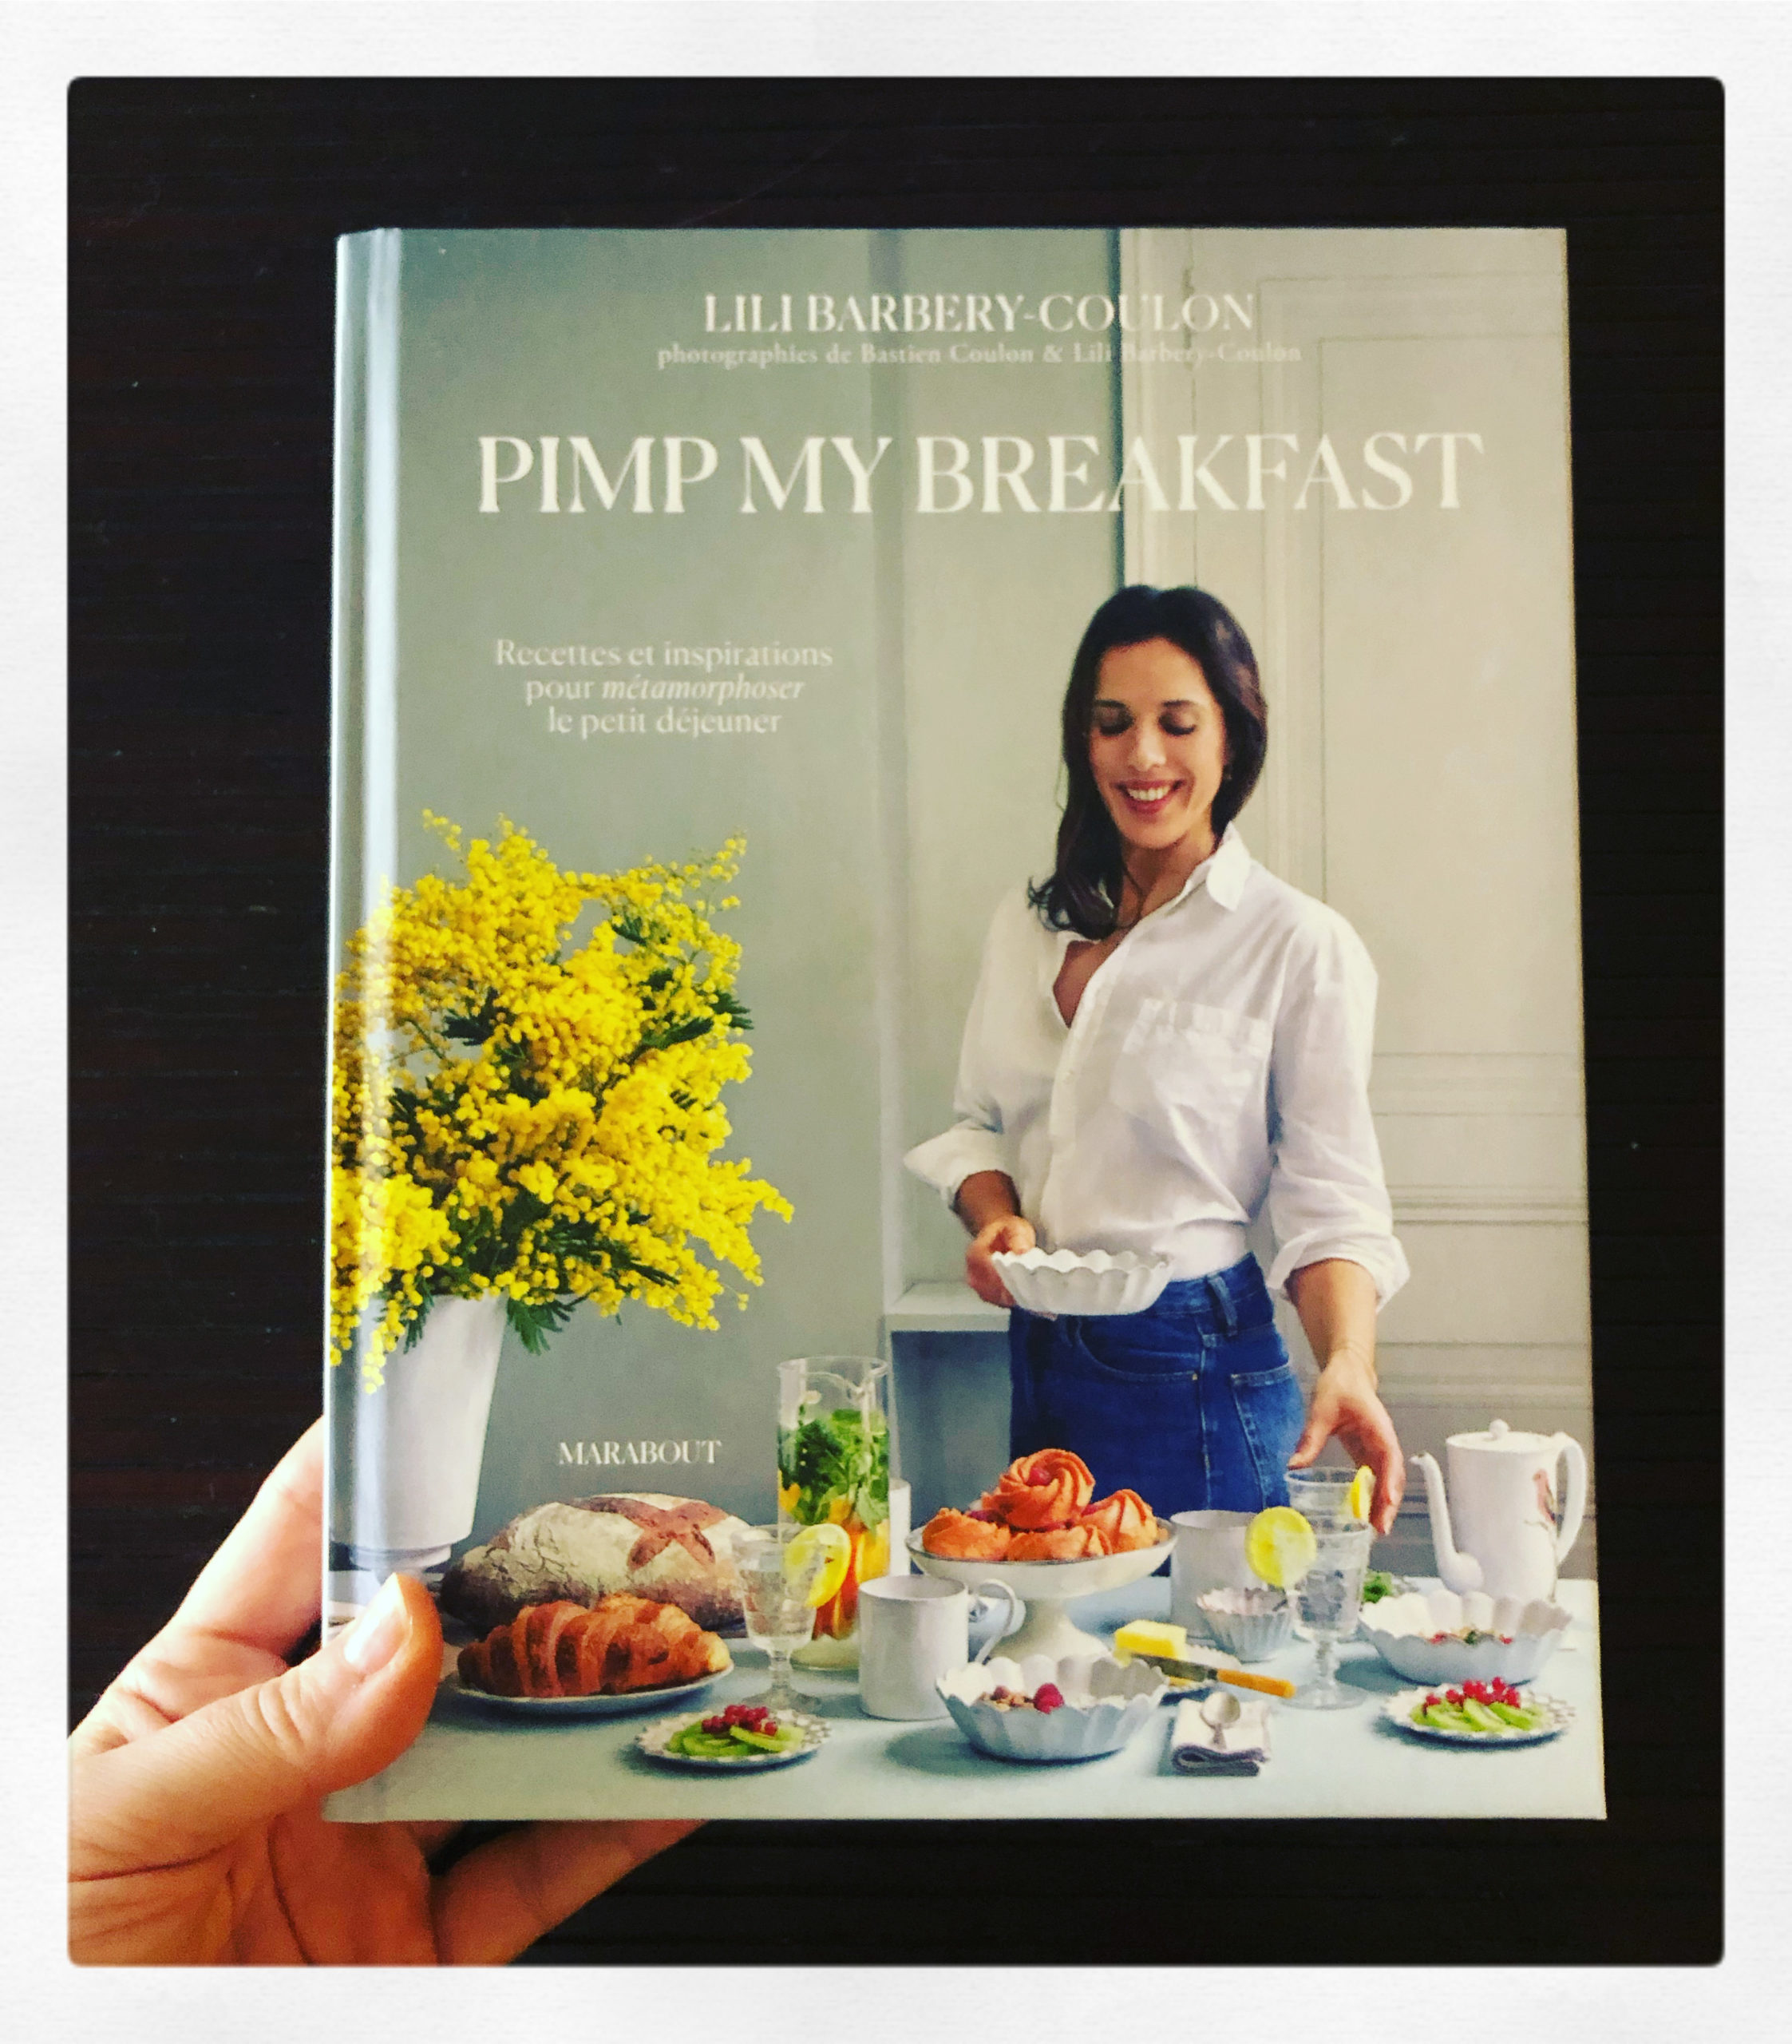 "Pimp my breakfast" de Lili Barbery-Coulon...